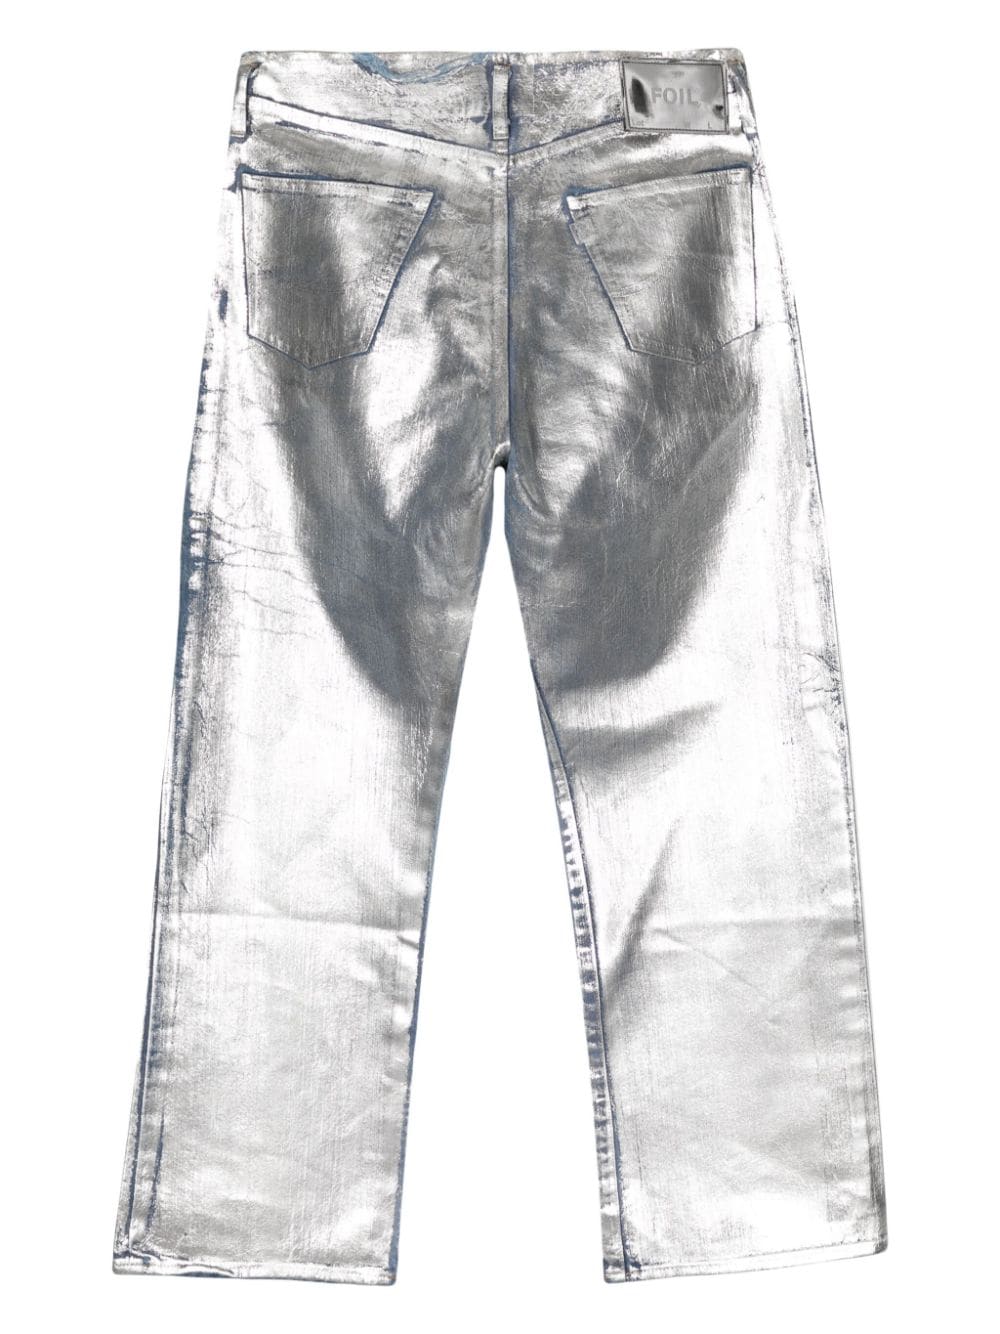 Doublet silver foil-coated jeans - Zilver